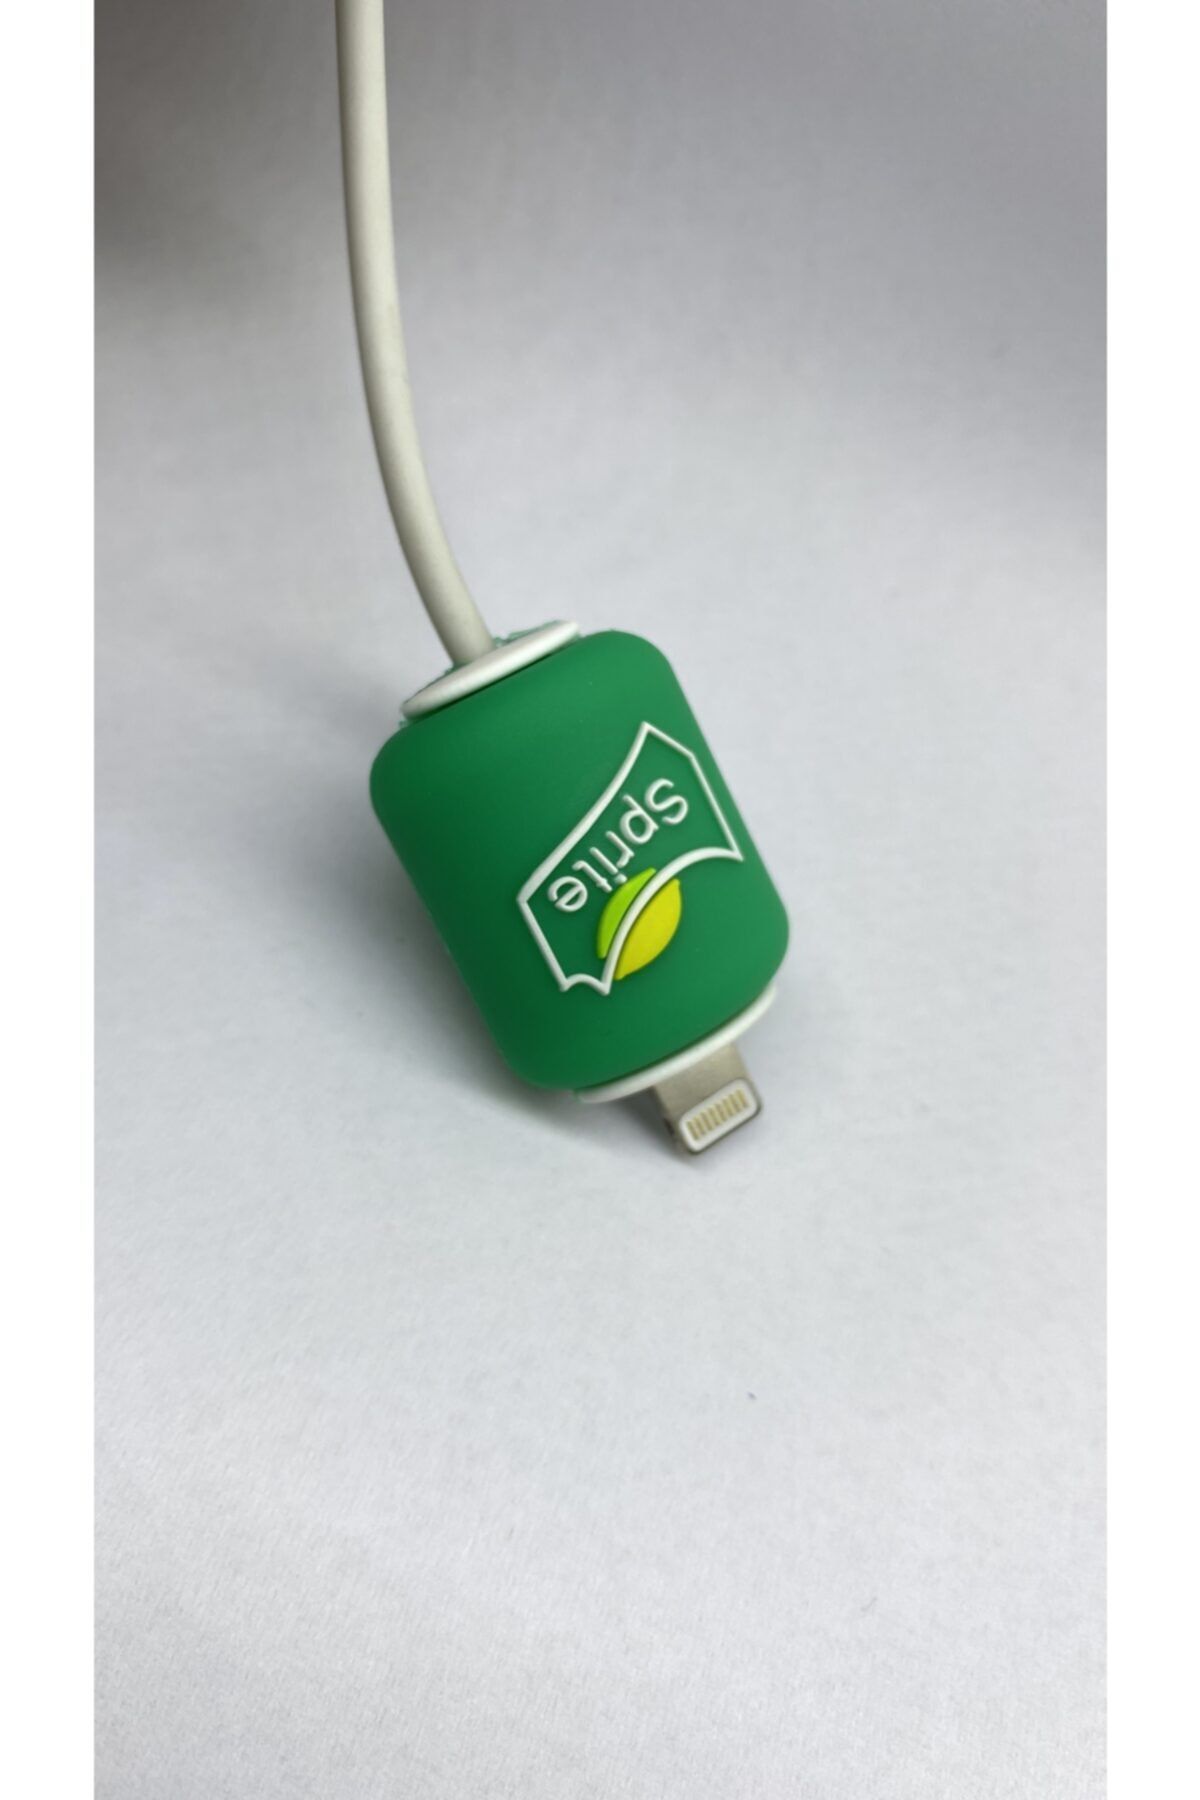 grahambell Unisex Yeşil Sevimli Kablo Koruyucu Sprite 91